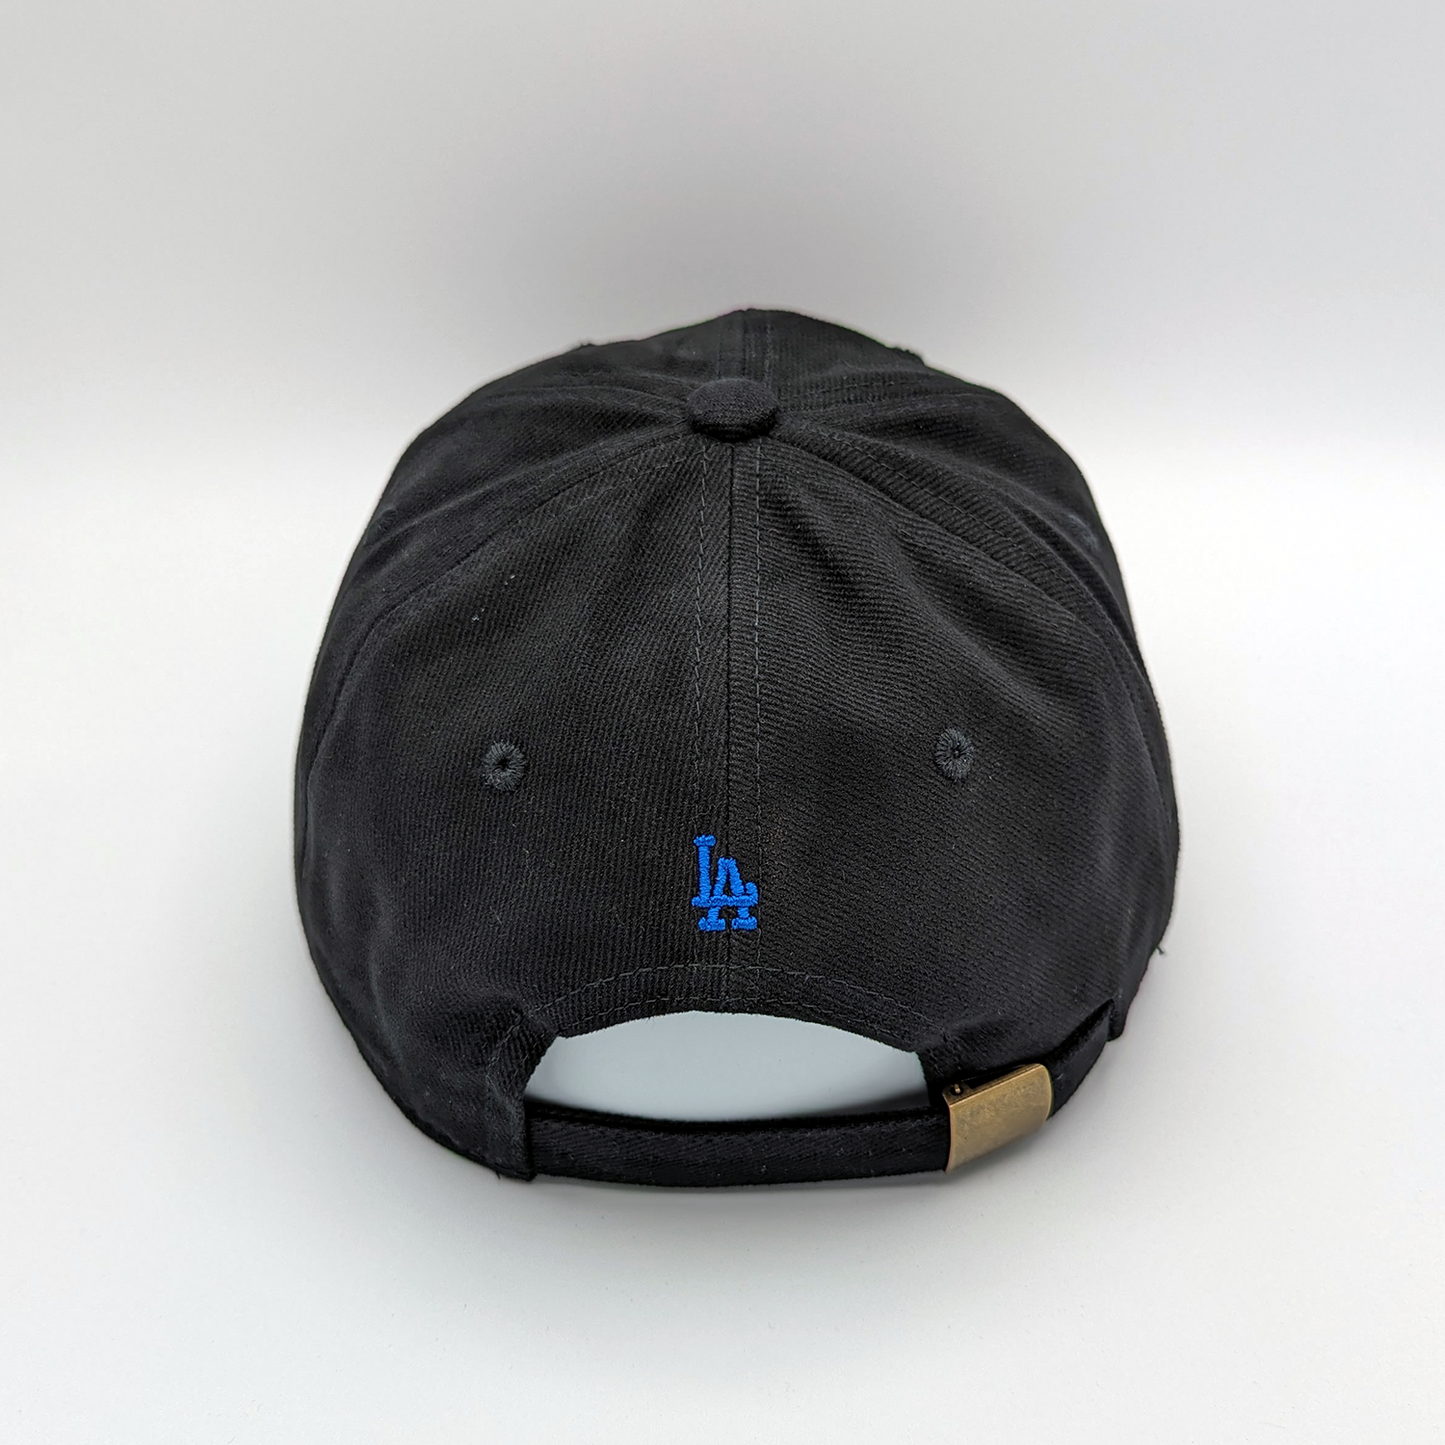 Japanese Dodgers Dad Hat